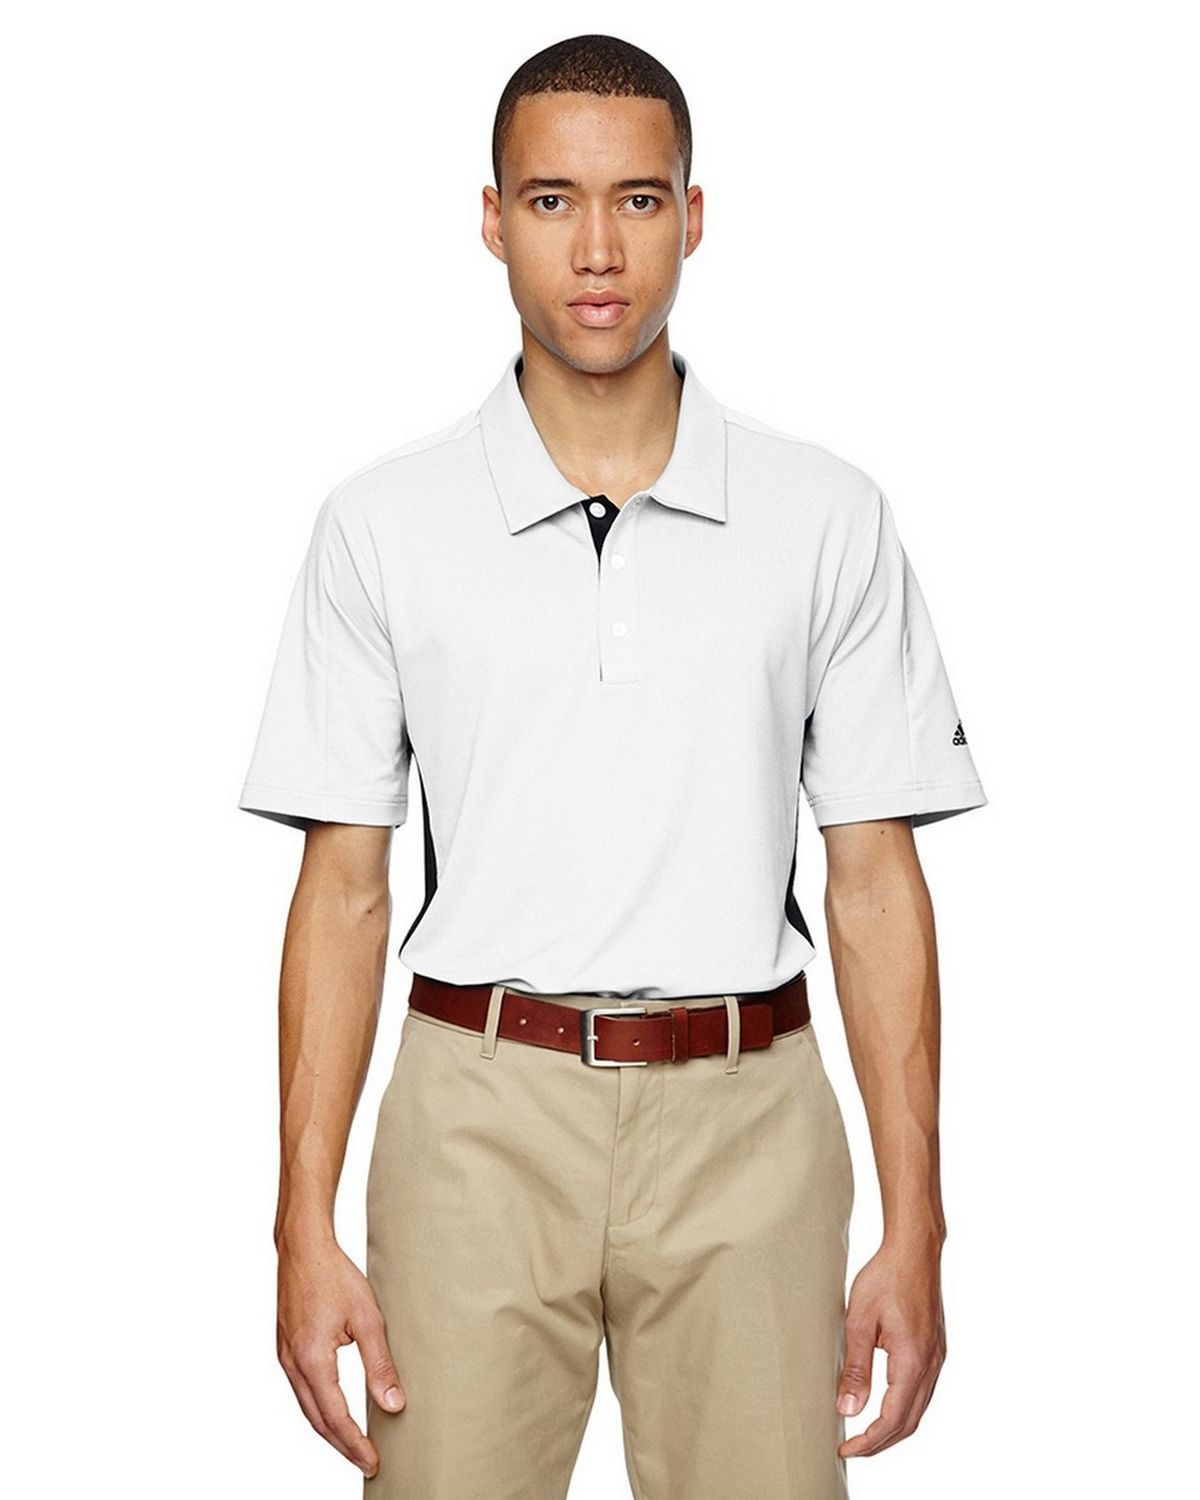 Adidas Golf A128 Puremotion Colorblock 3 Stripes Polo Shirt